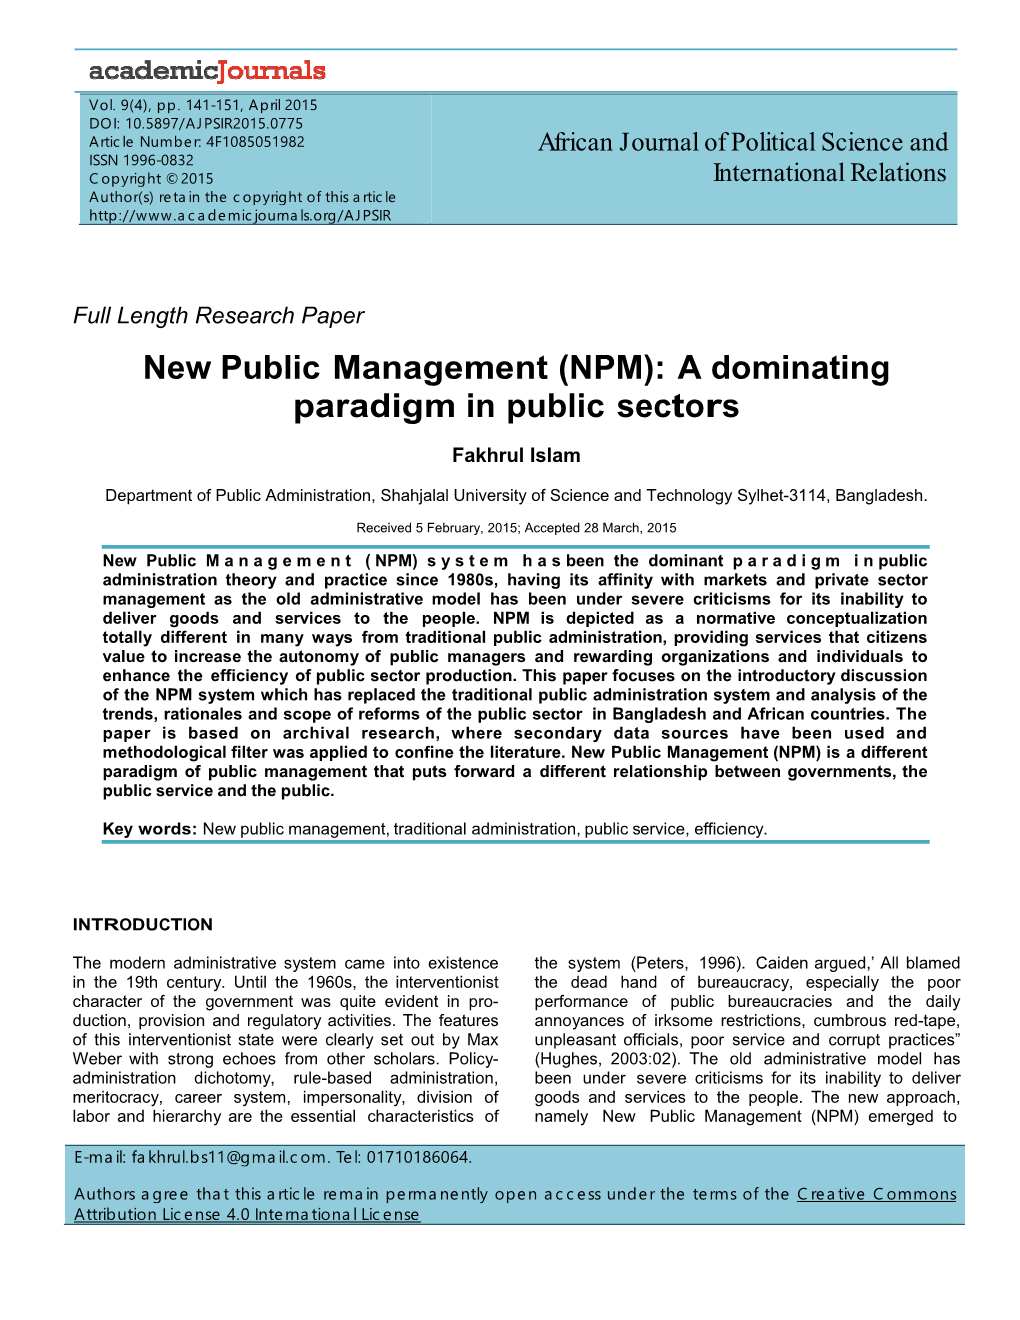 New Public Management (NPM): a Dominating Paradigm in Public Sectors